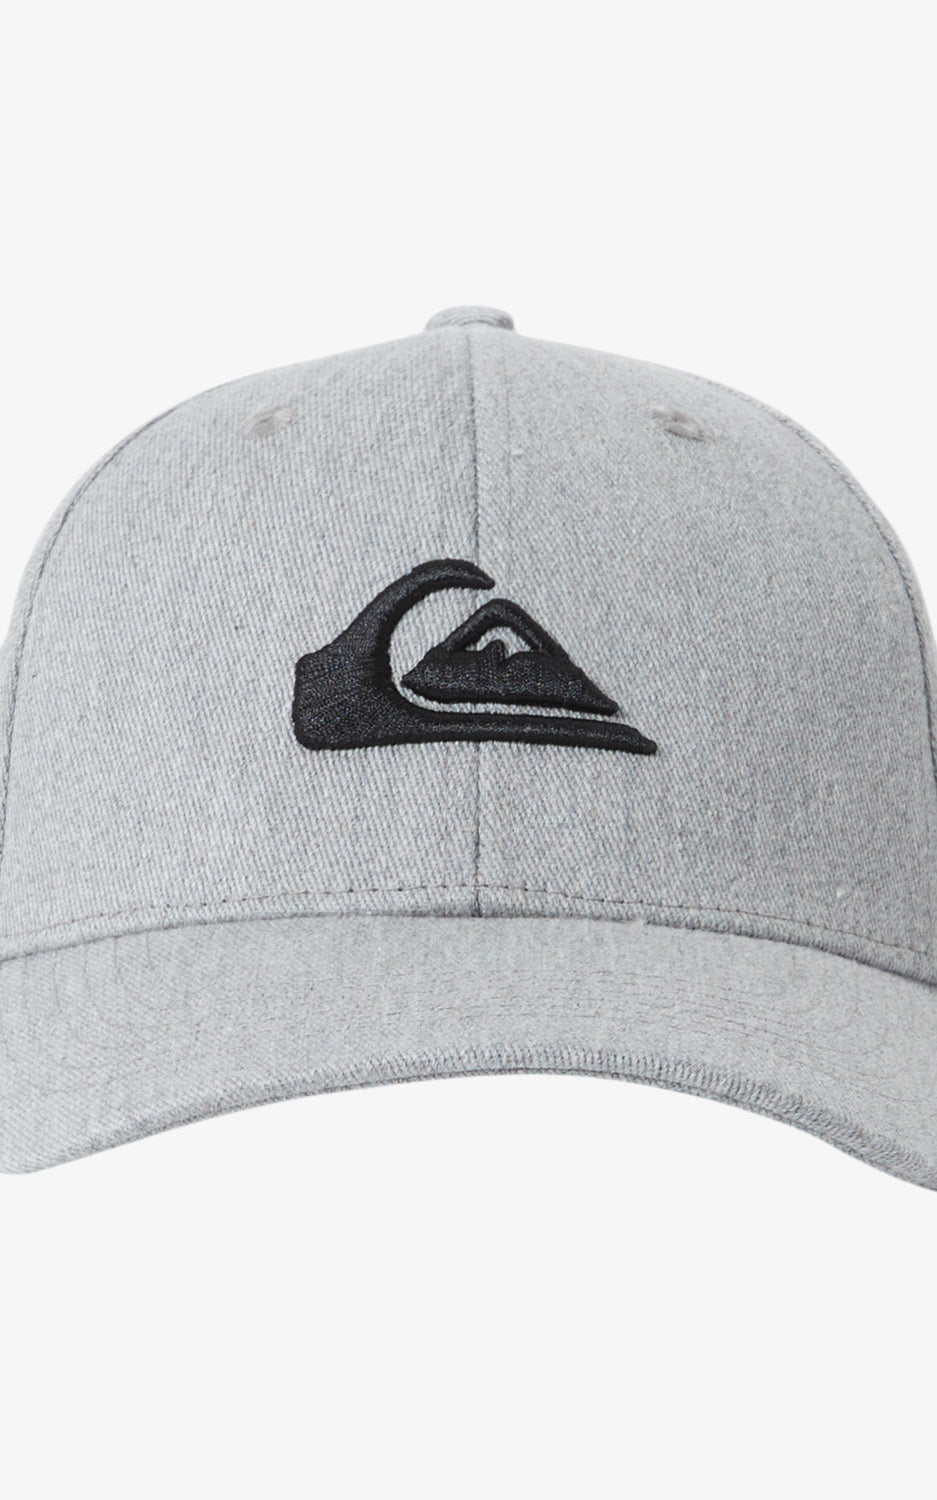 Quiksilver: Decades Snapback Hat